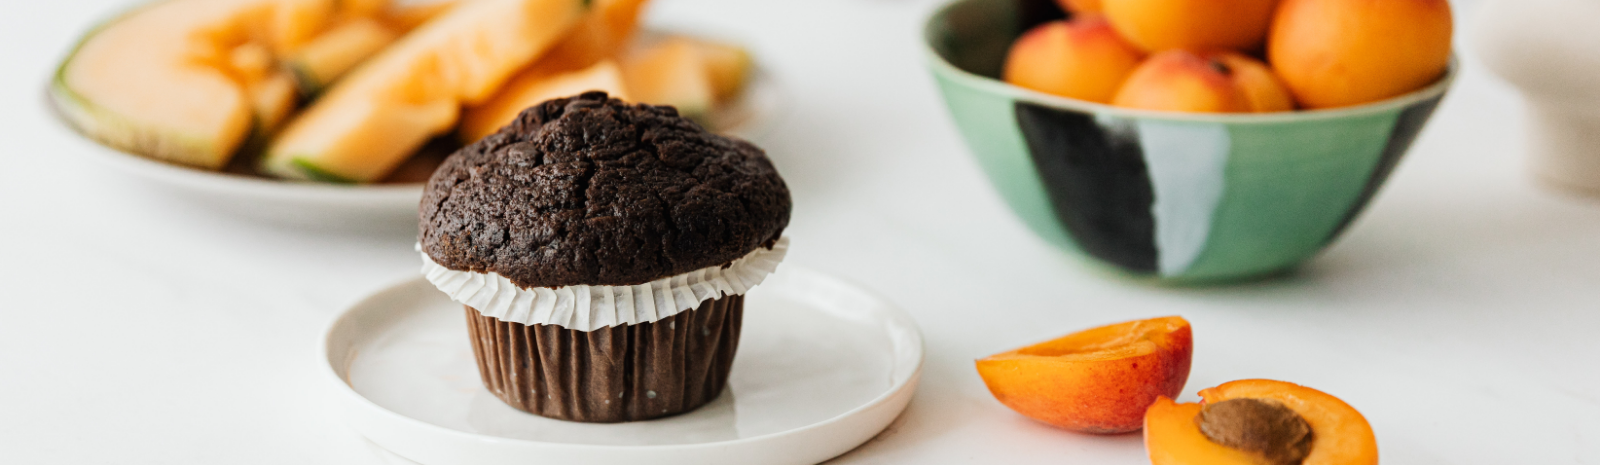 Chocolate cupcake with fruit